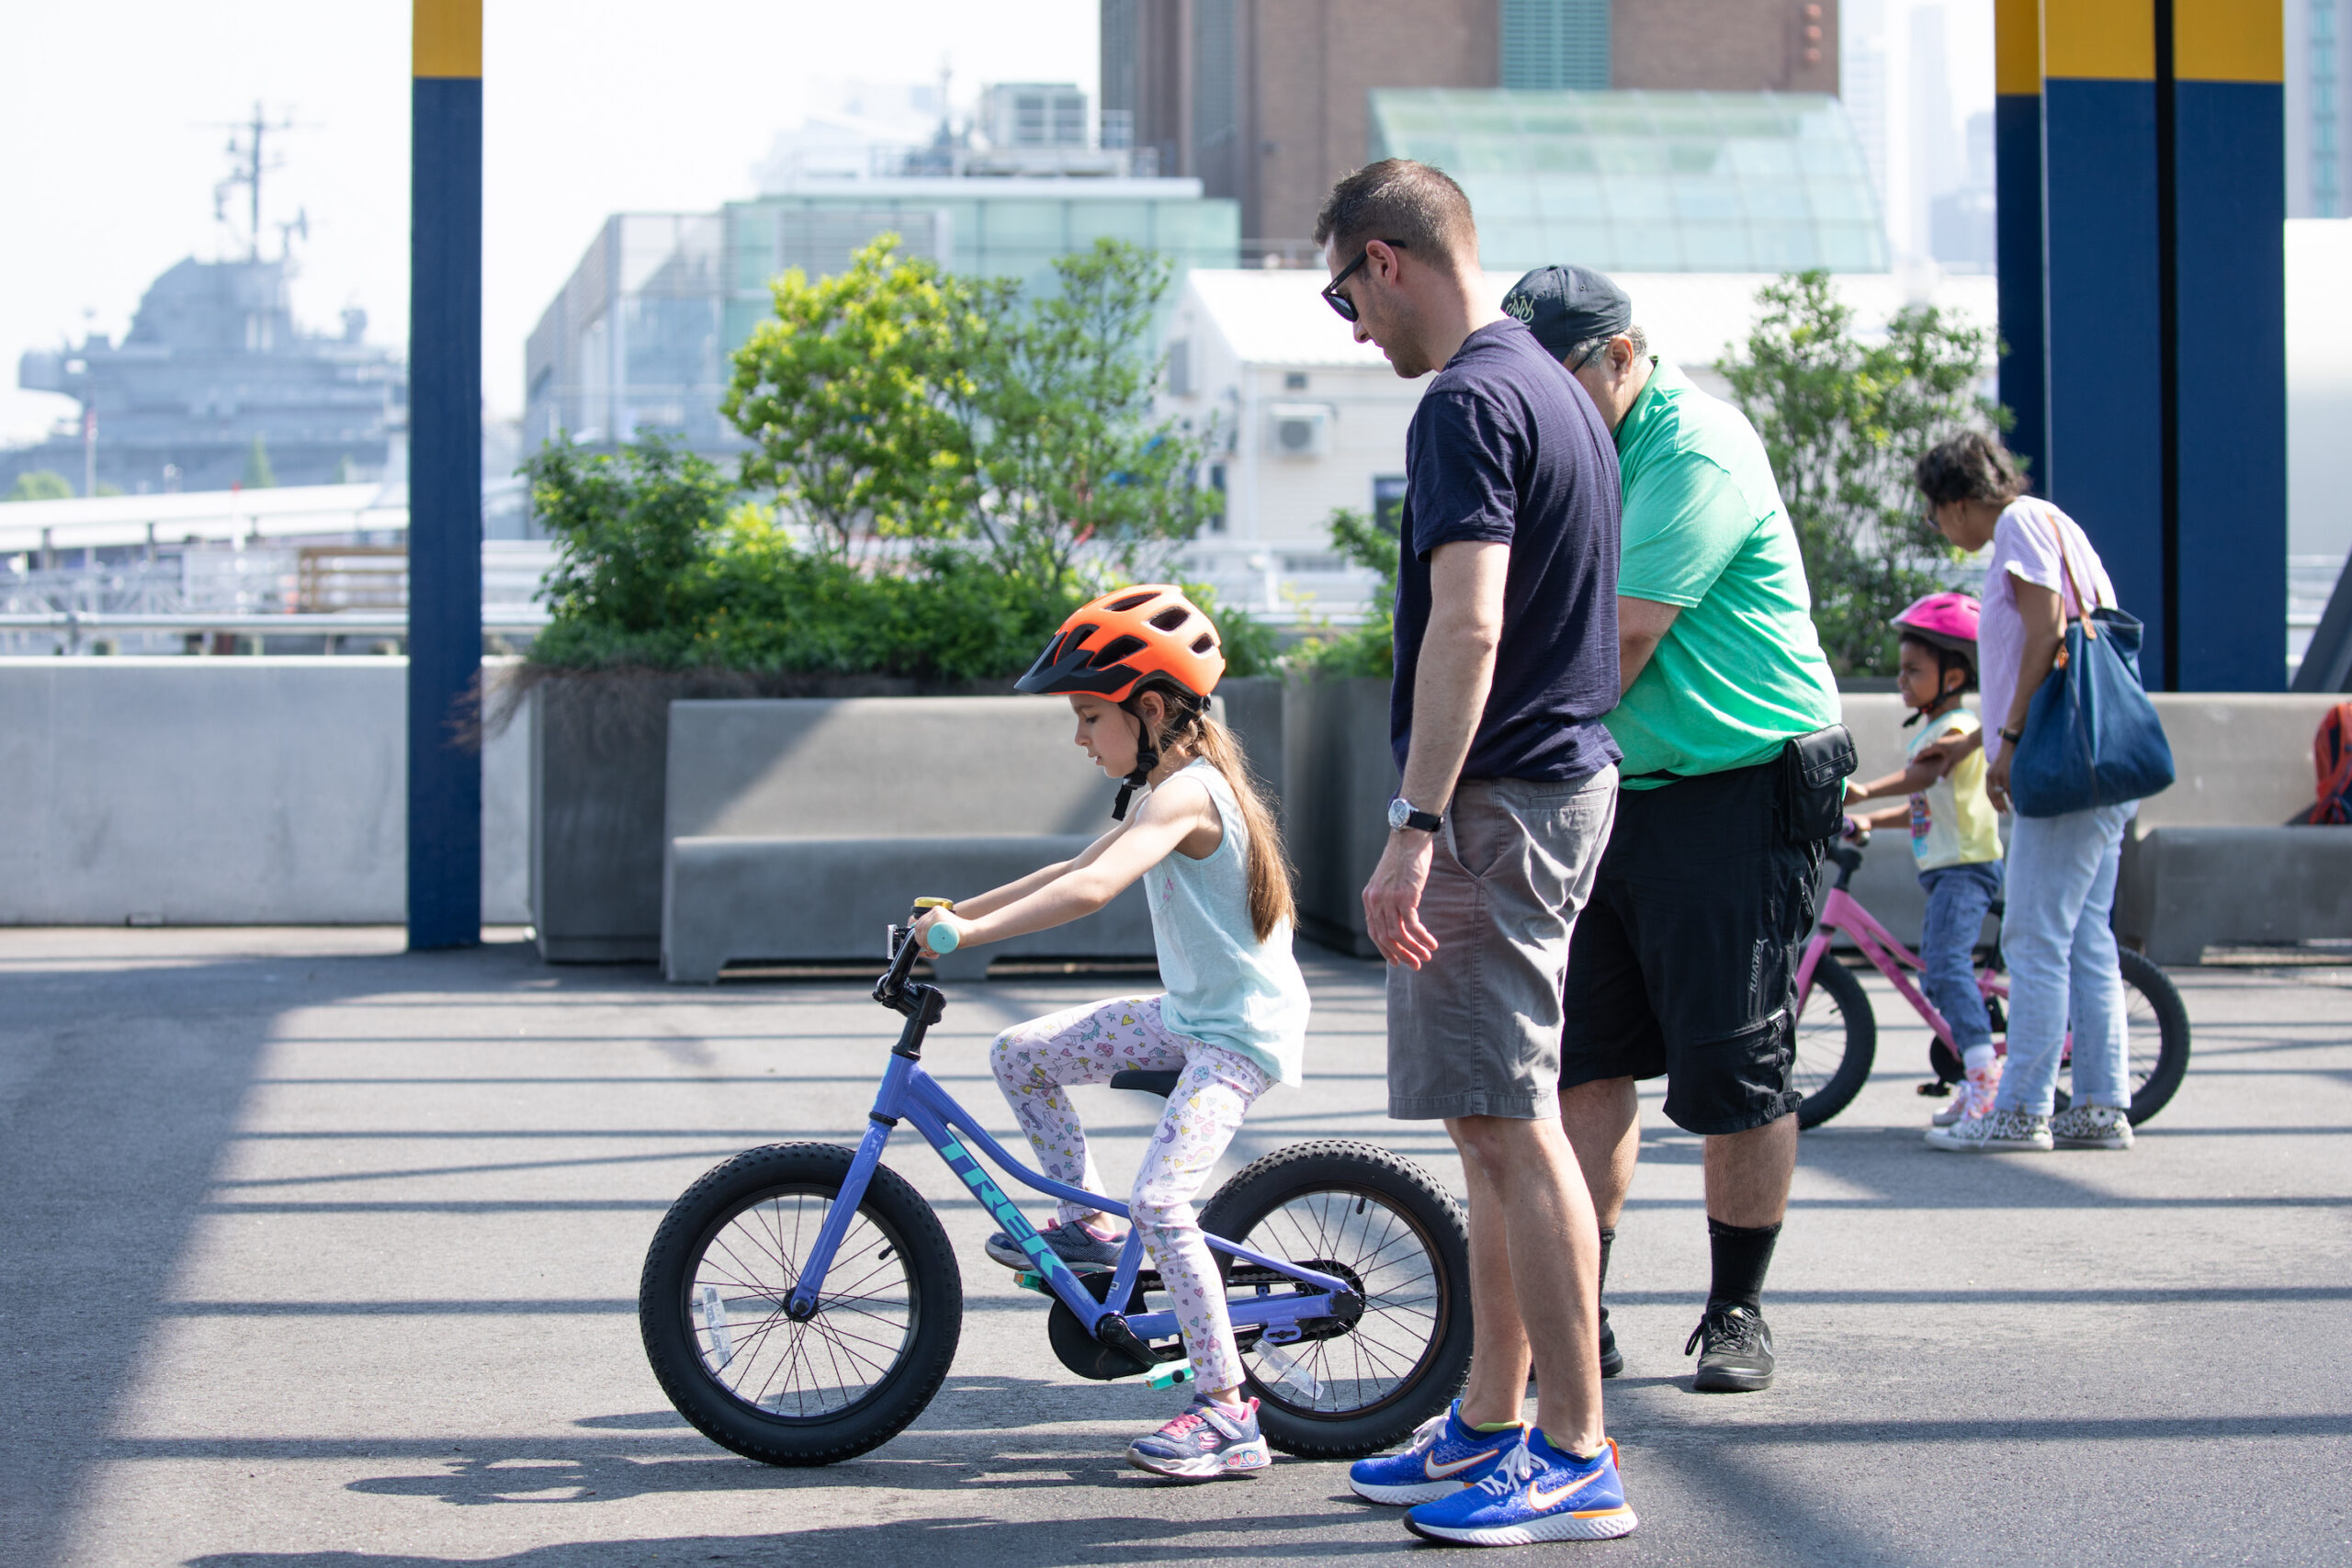 A Bike New York Bike Skills instructor teaching a girl how to ride a bike while her parent looks on